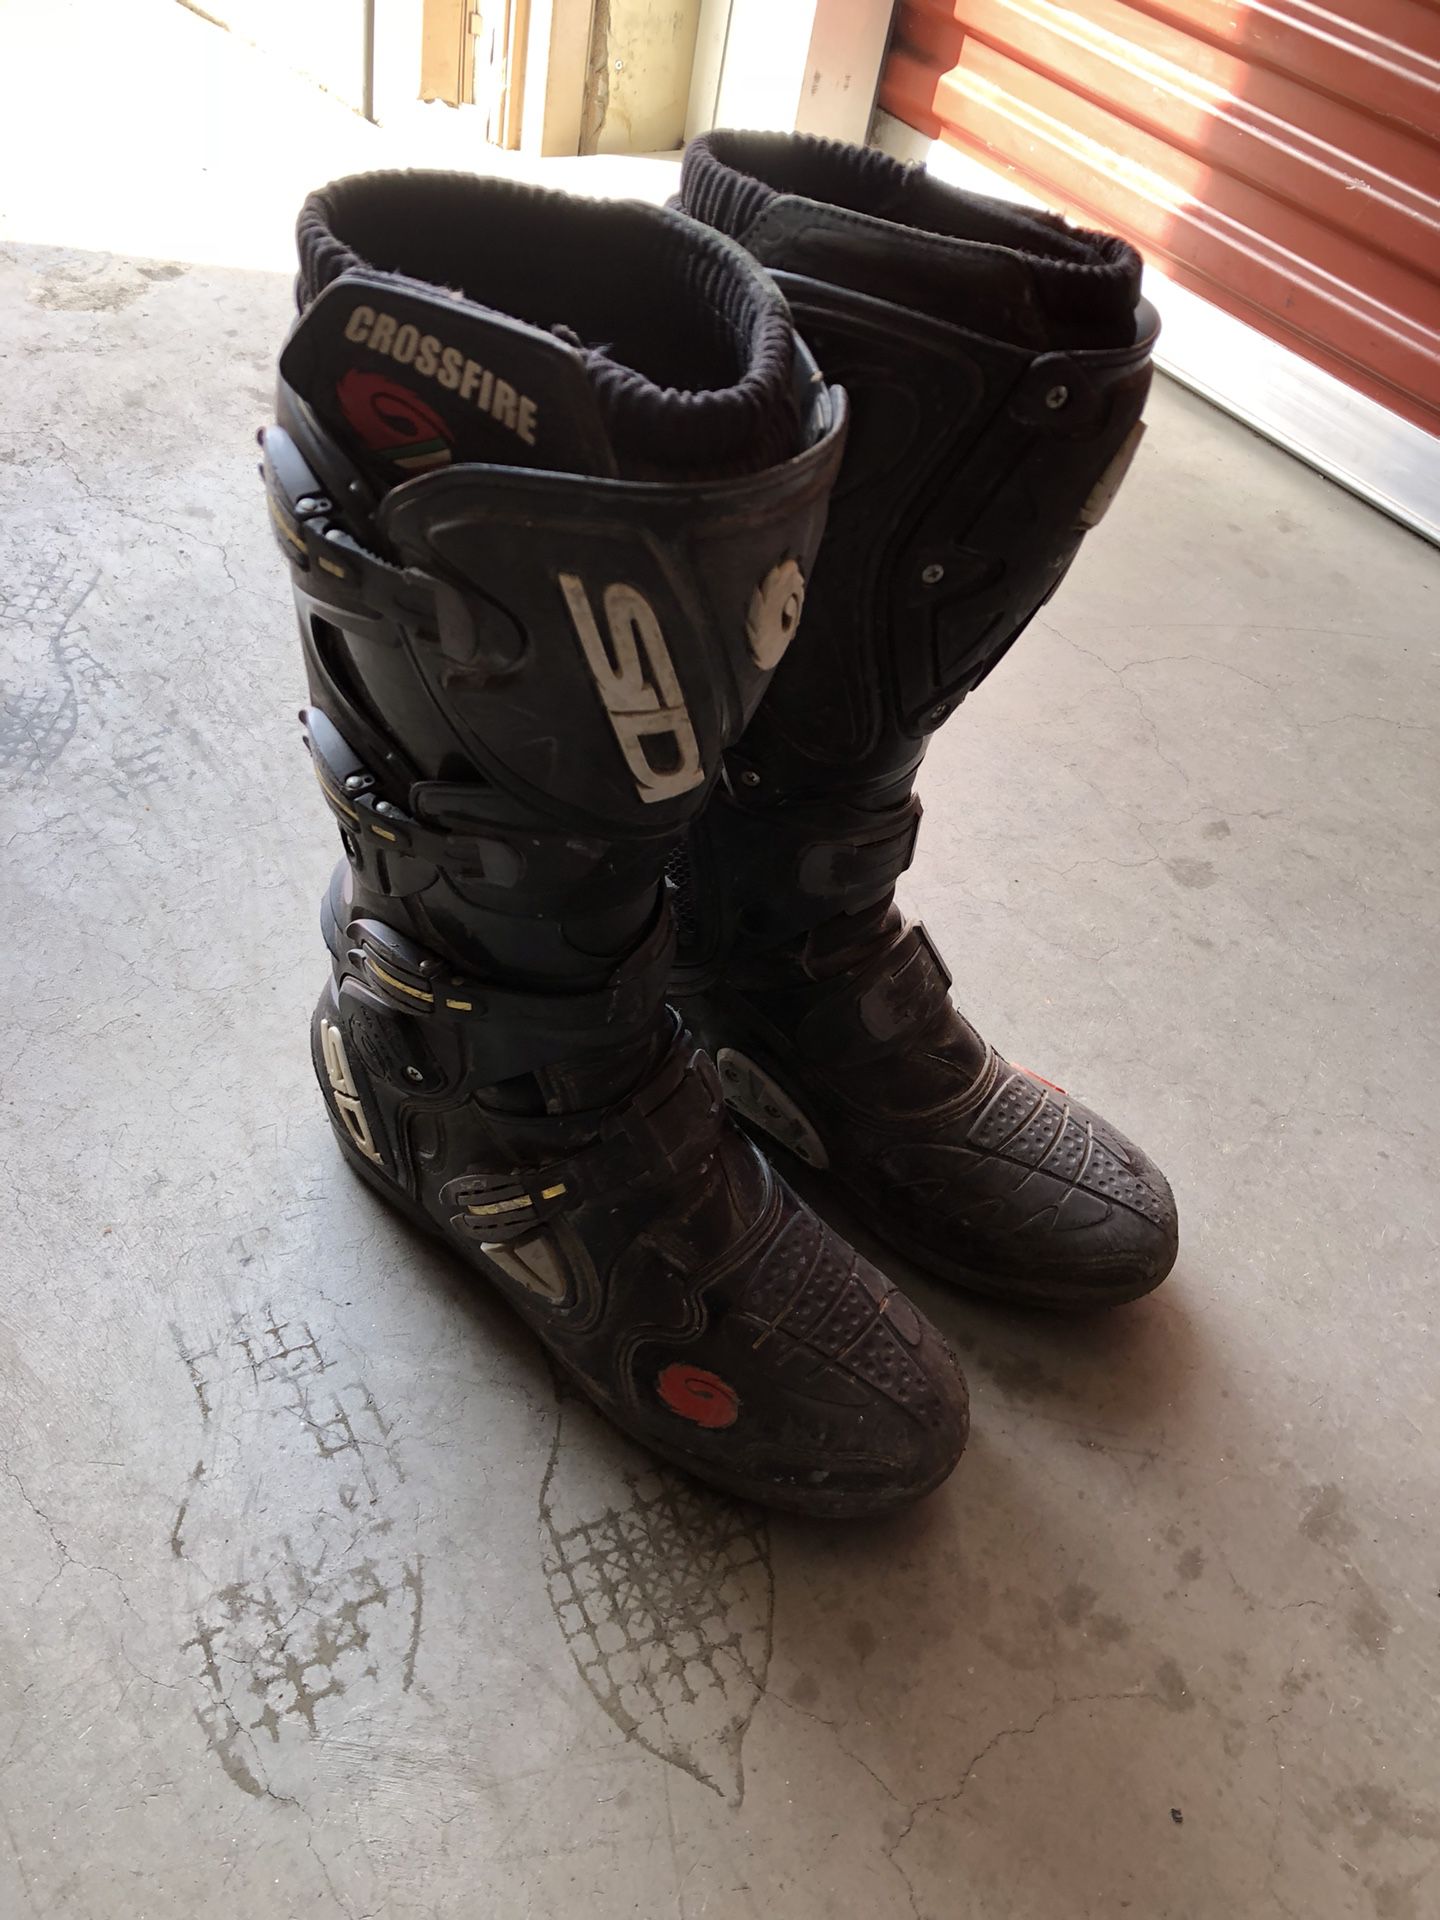 Dirt bike boots size 12 $100